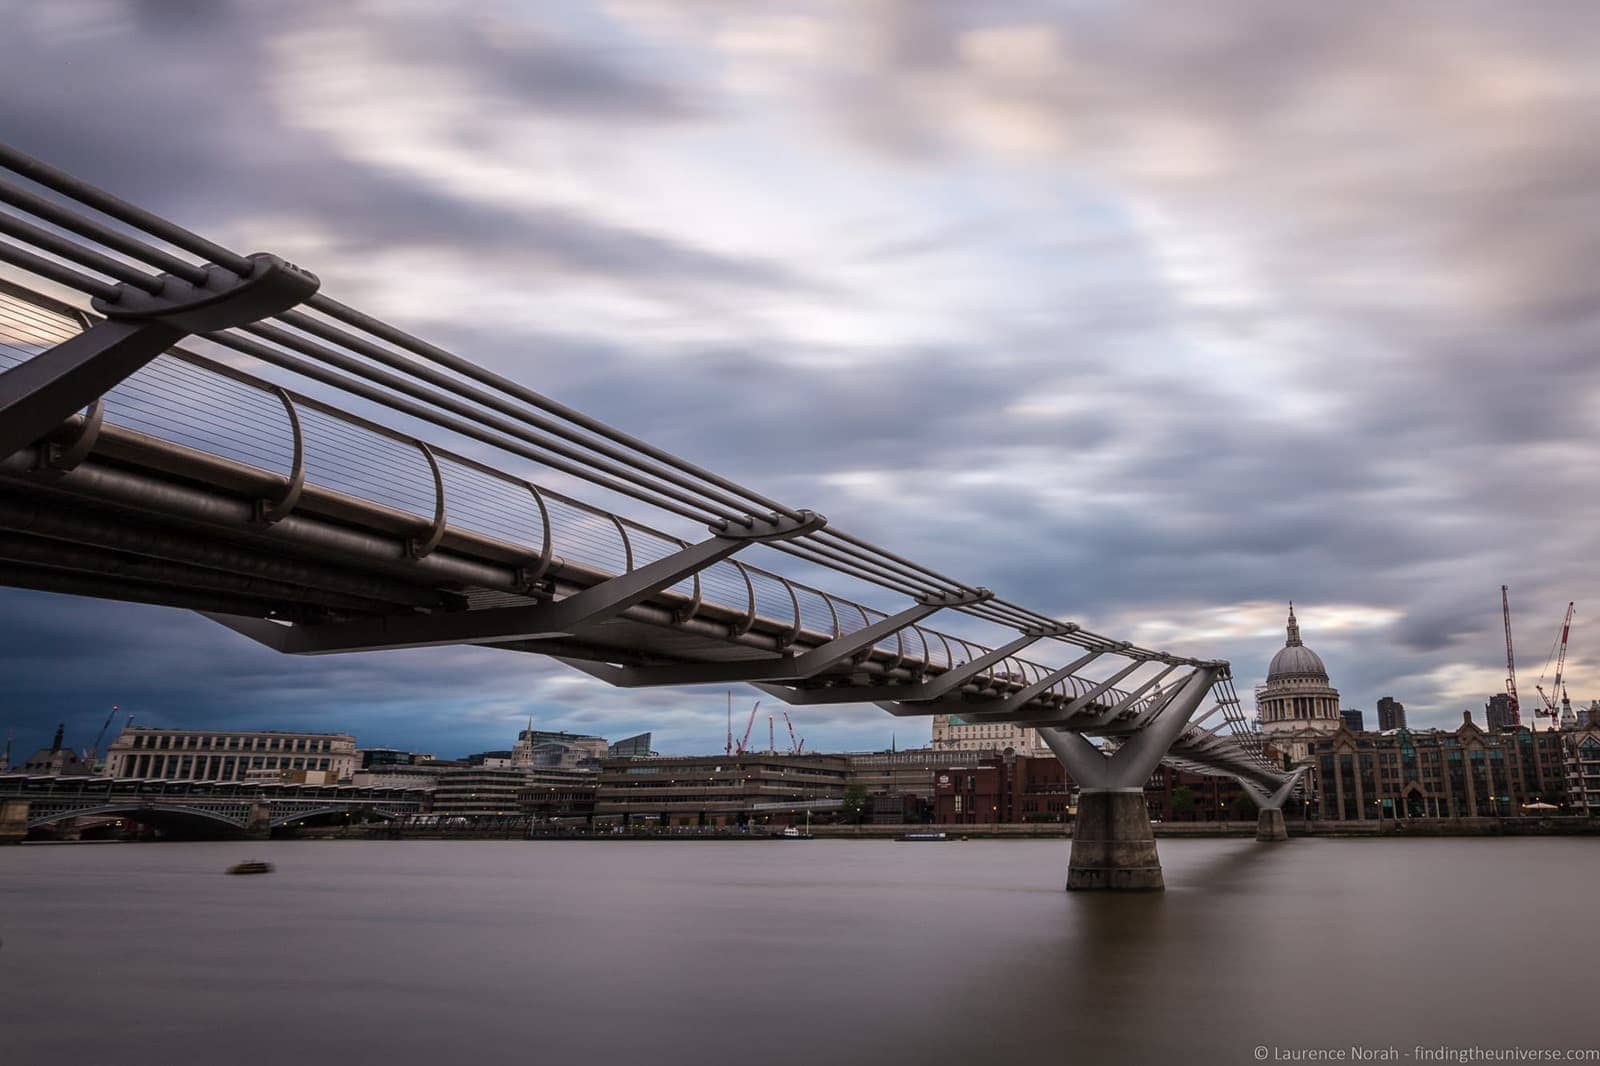 Harry Potter Filming Location London - Millenium Bridge